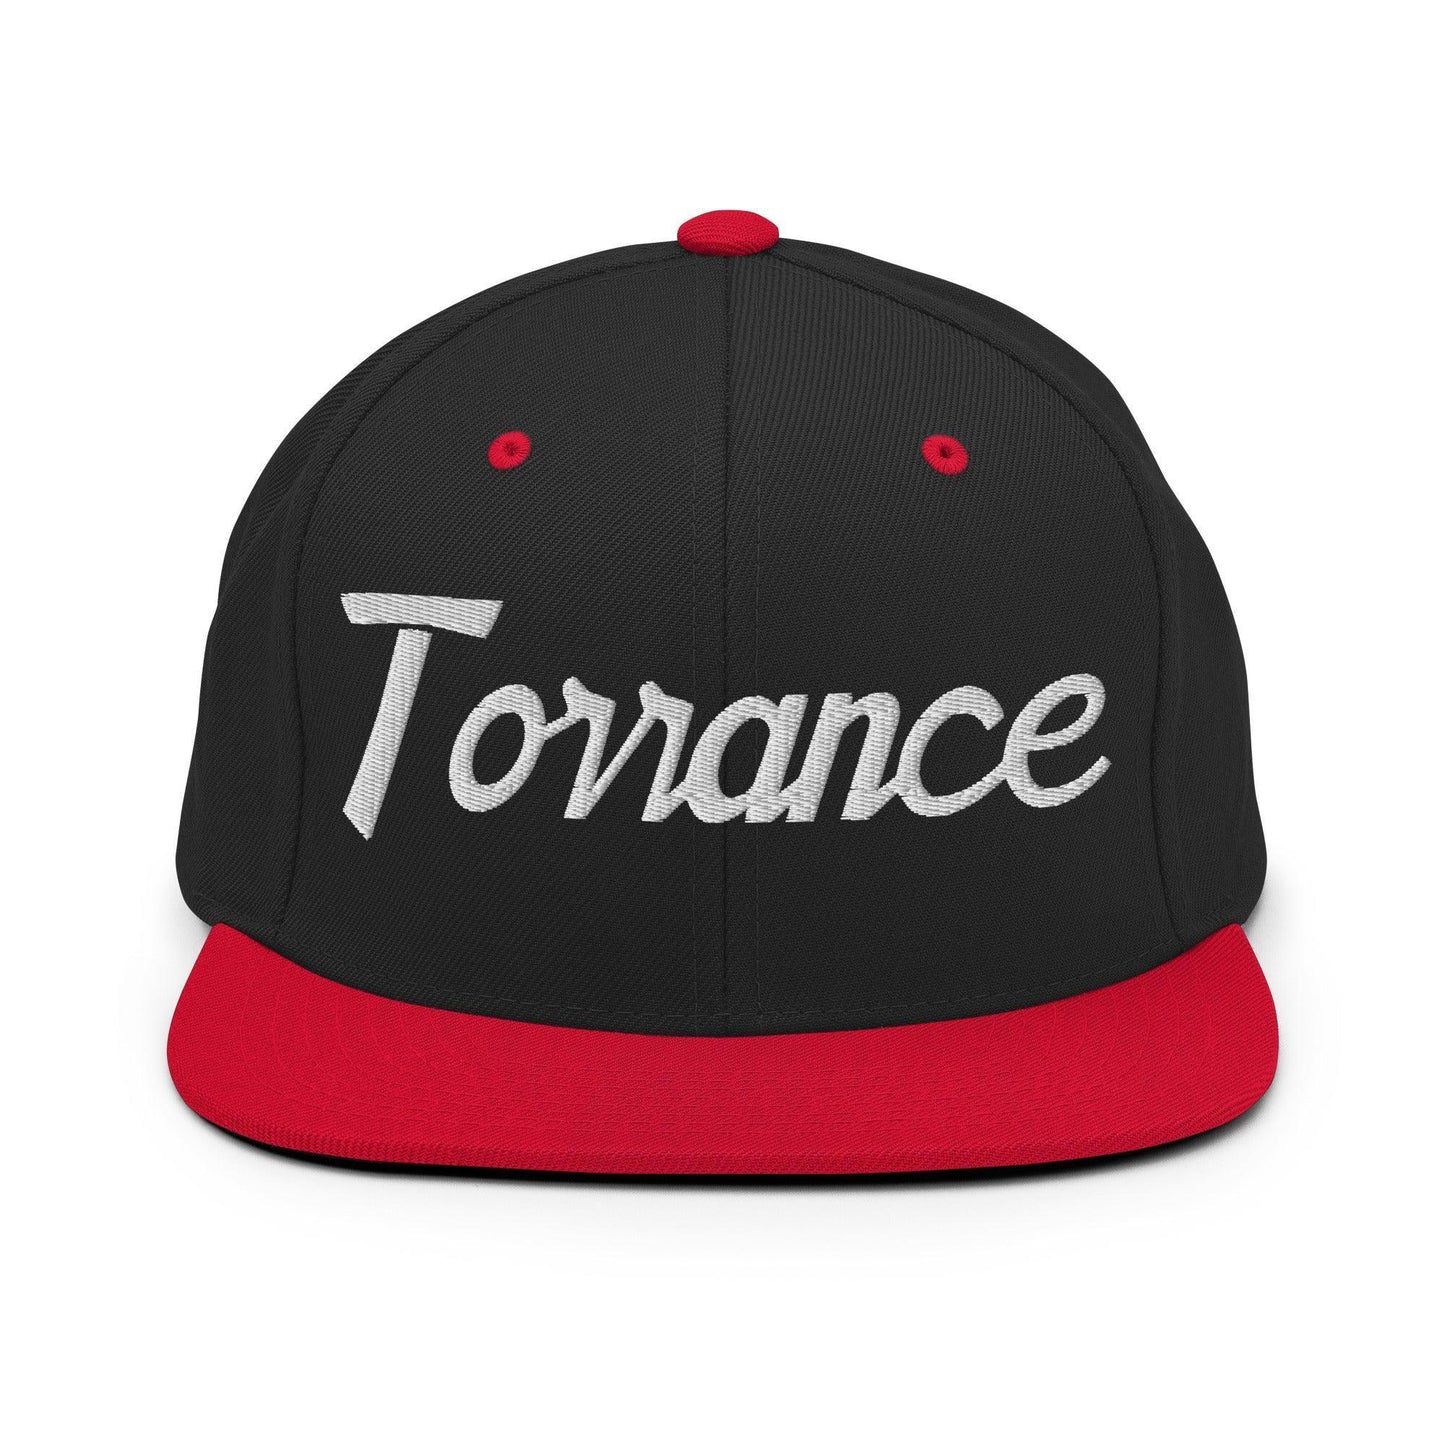 Torrance Script Snapback Hat Black Red